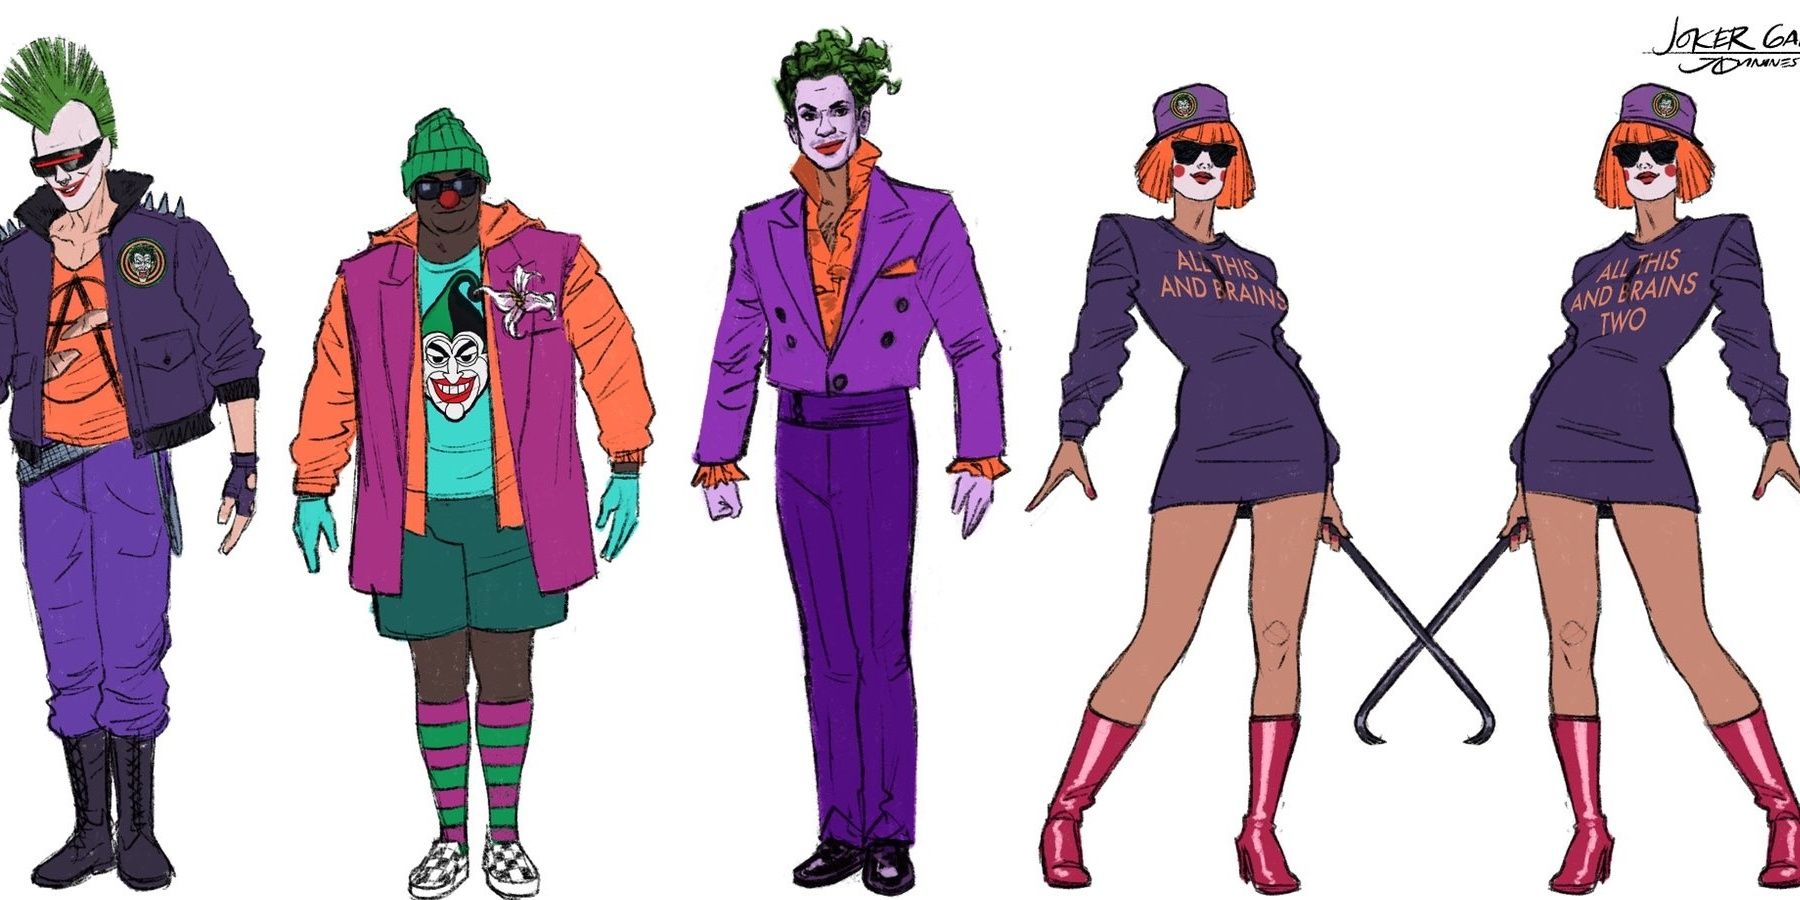 The Joker Gang in the upcoming Batman '89 comic book series, illustrated by Joe Quinones